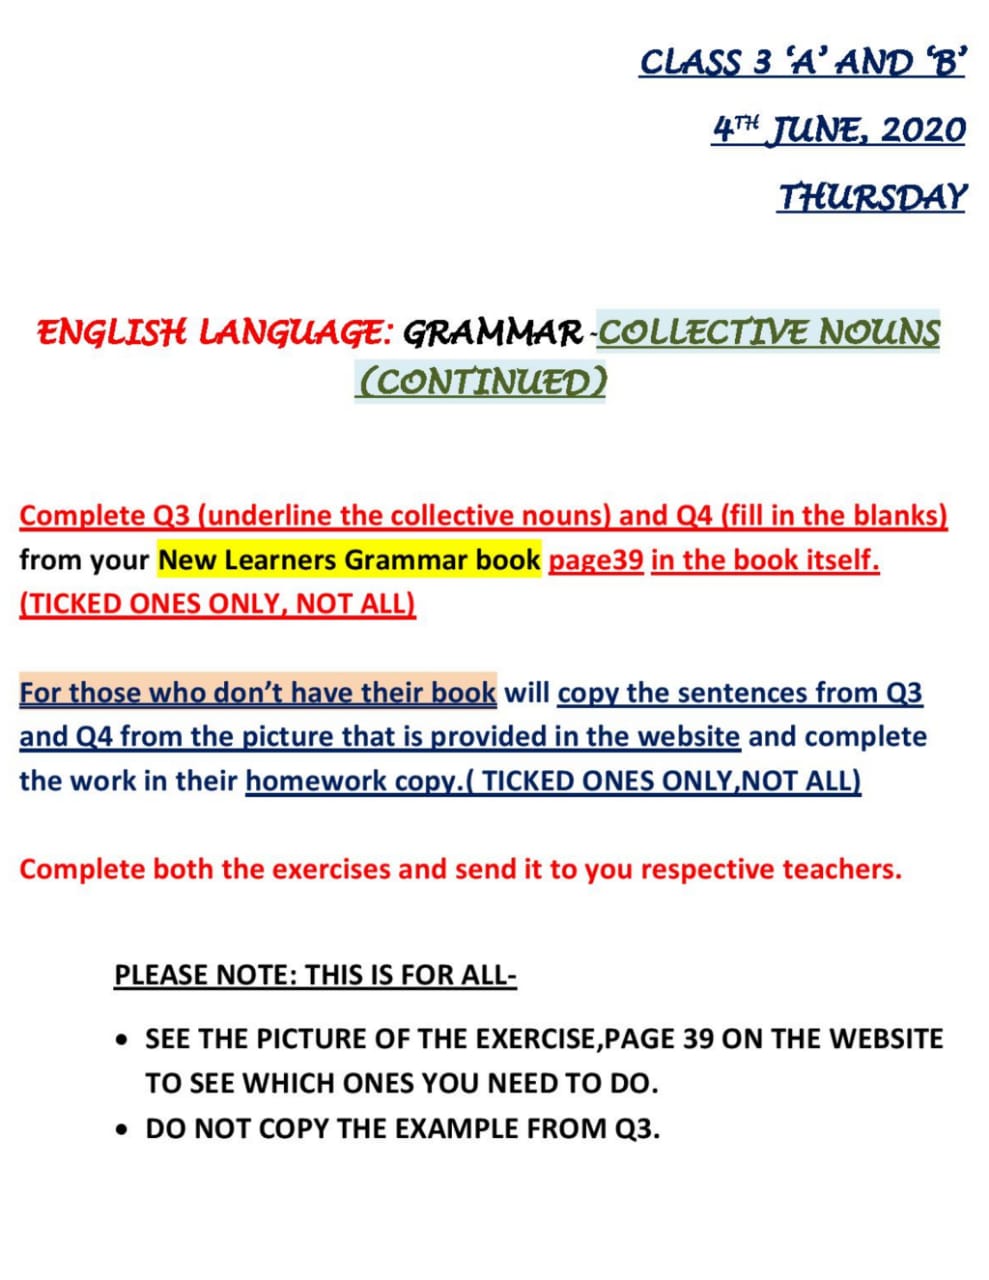 Language Homework Q3